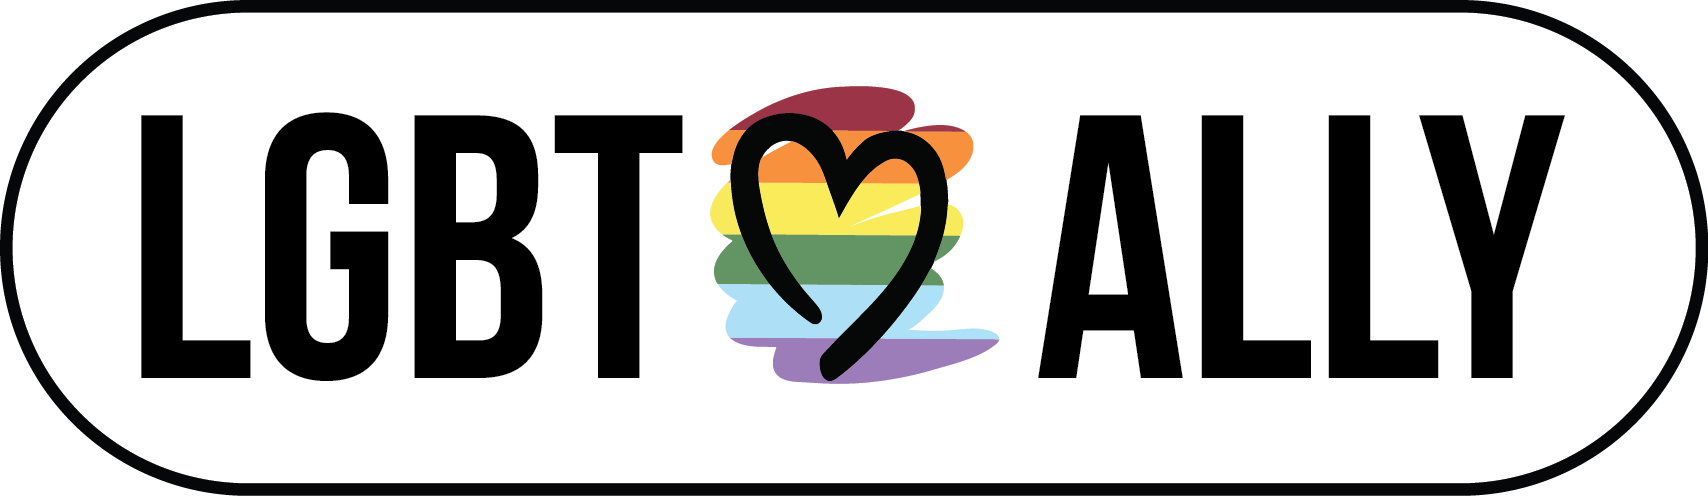 LGBT Ally Logo final 002